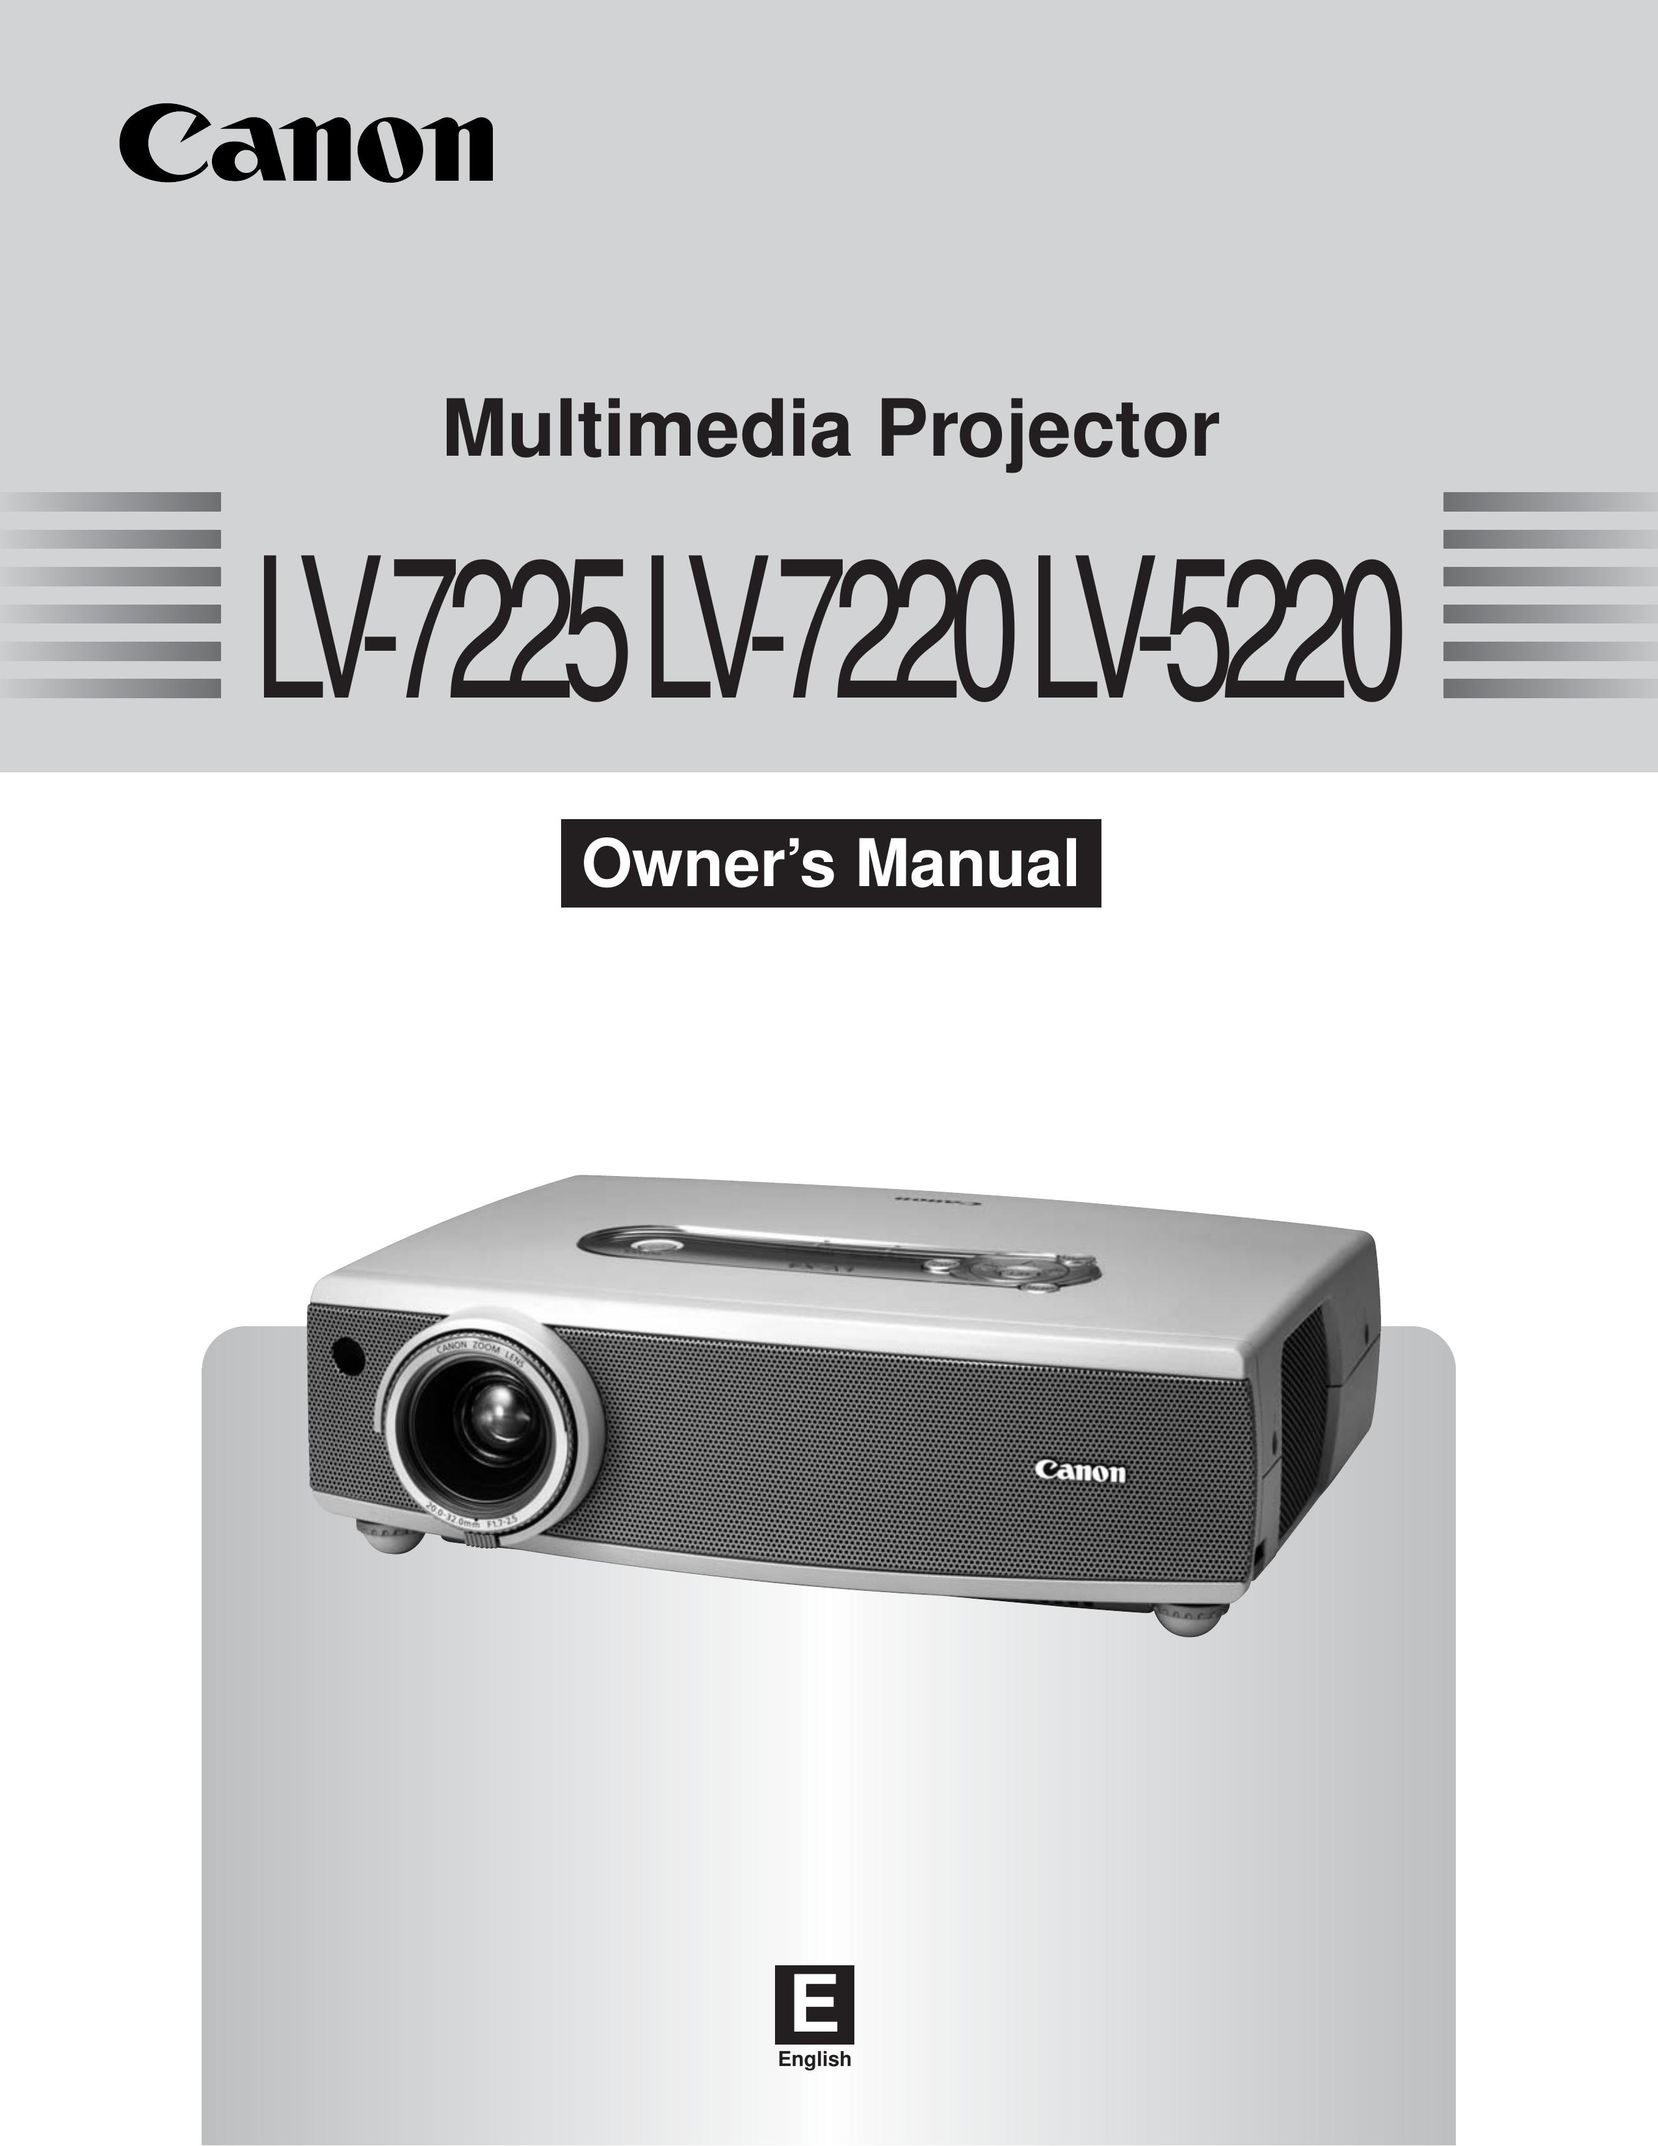 Canon LV-5220 Projector User Manual